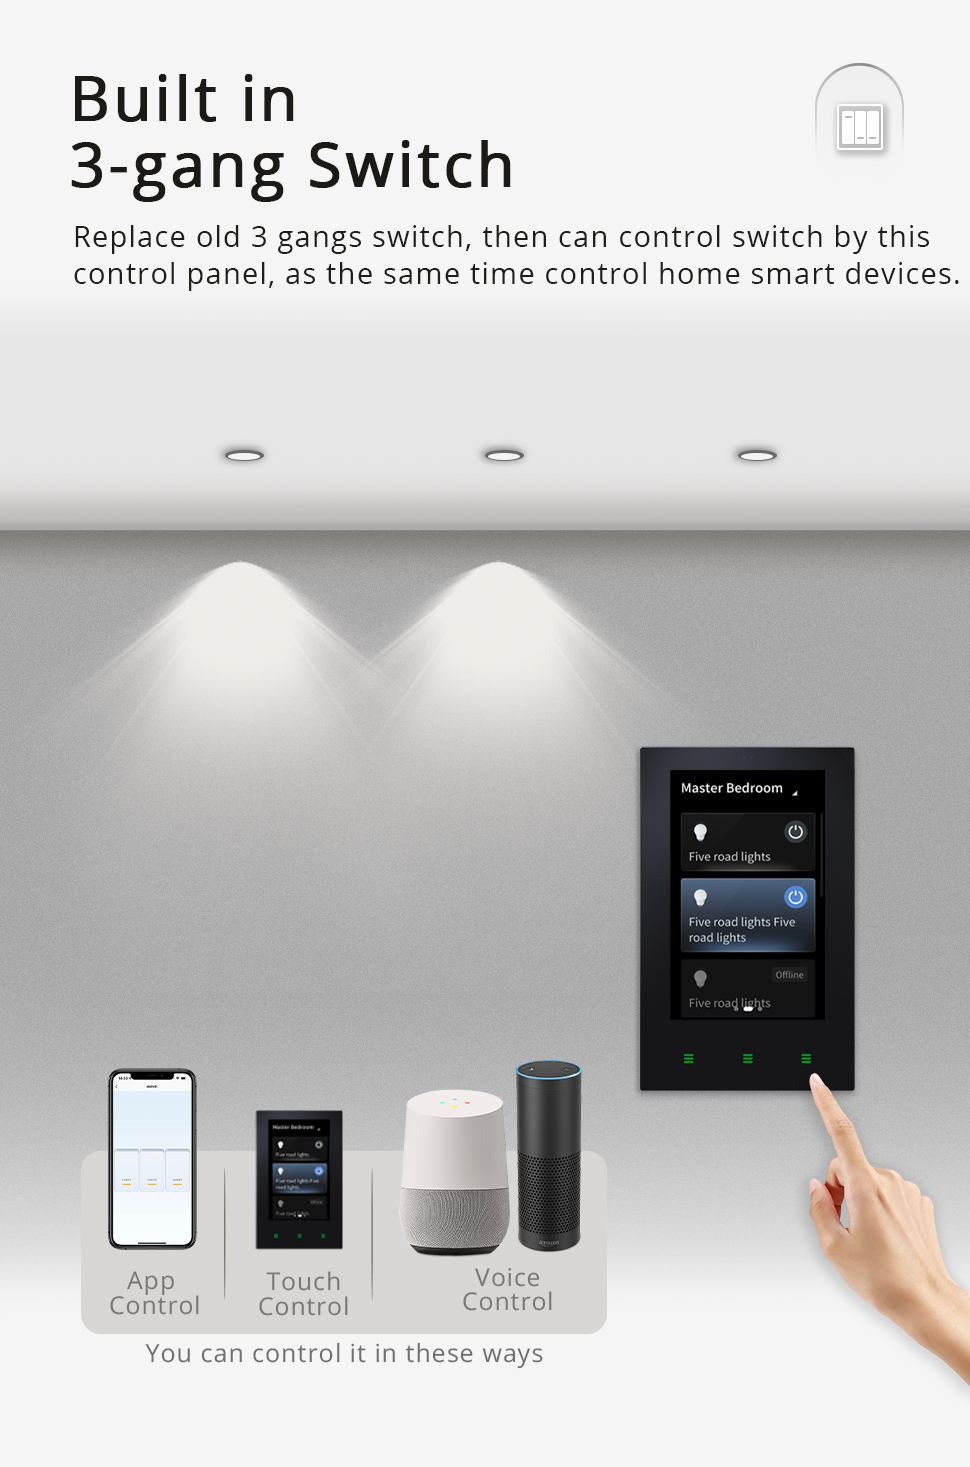 Control smart devices with Tuya Smart Life - danimart1991's Blog